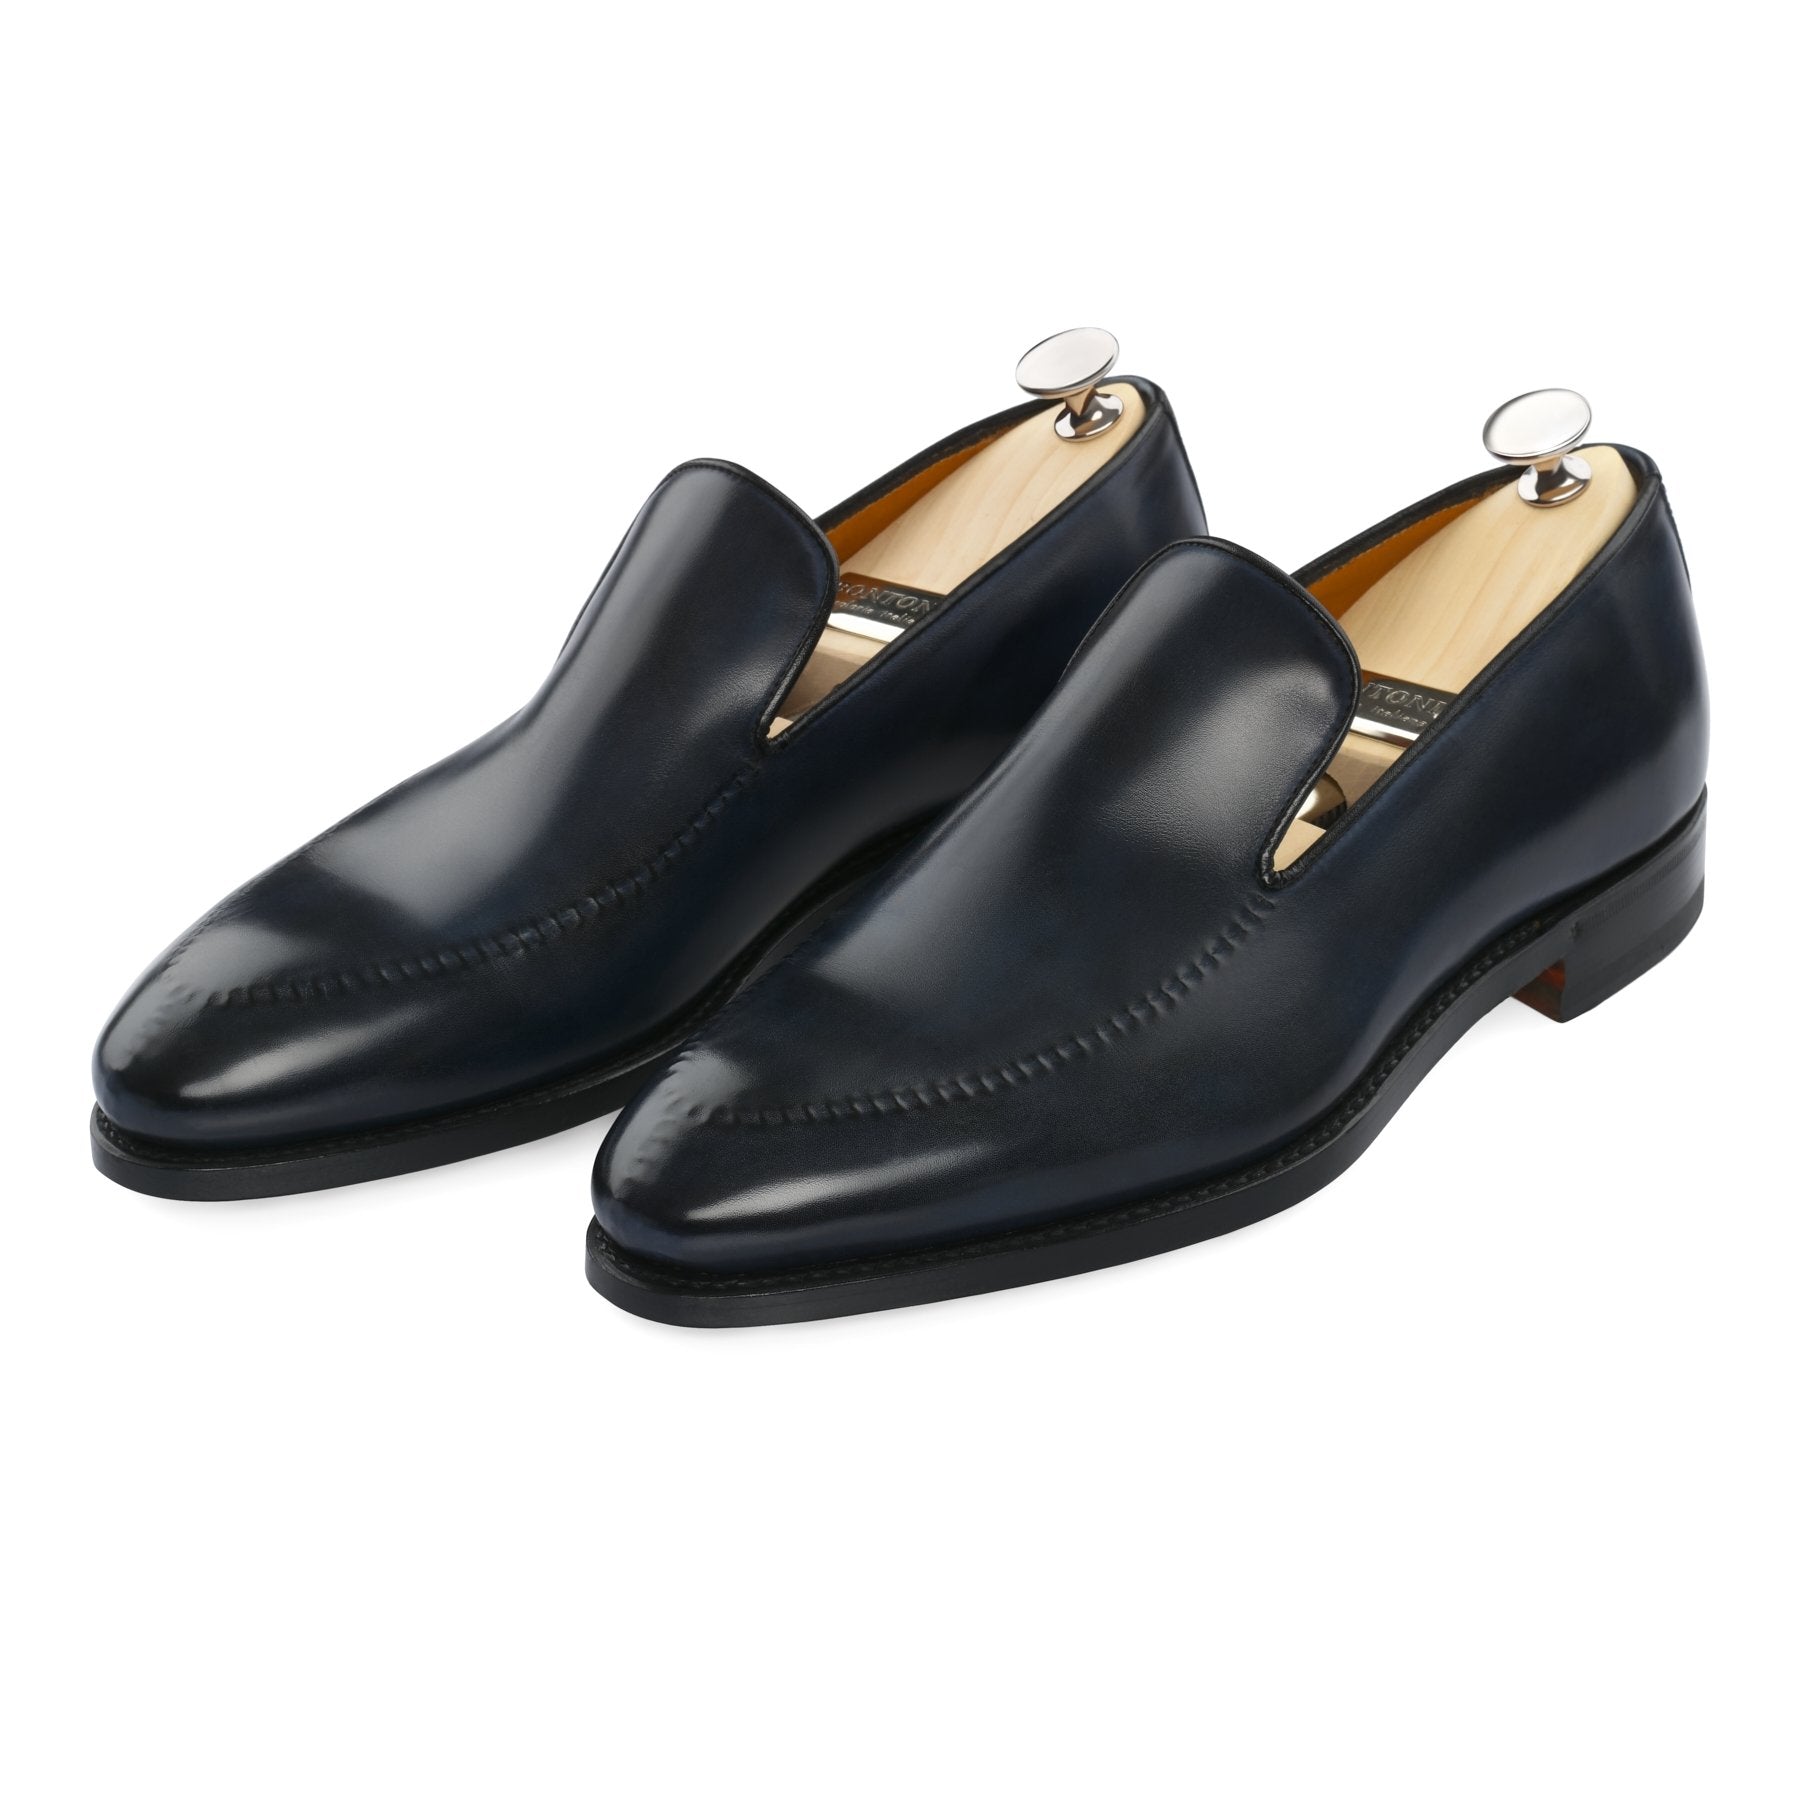 Bontoni Men's Shoes - Handcrafted Italian Shoes